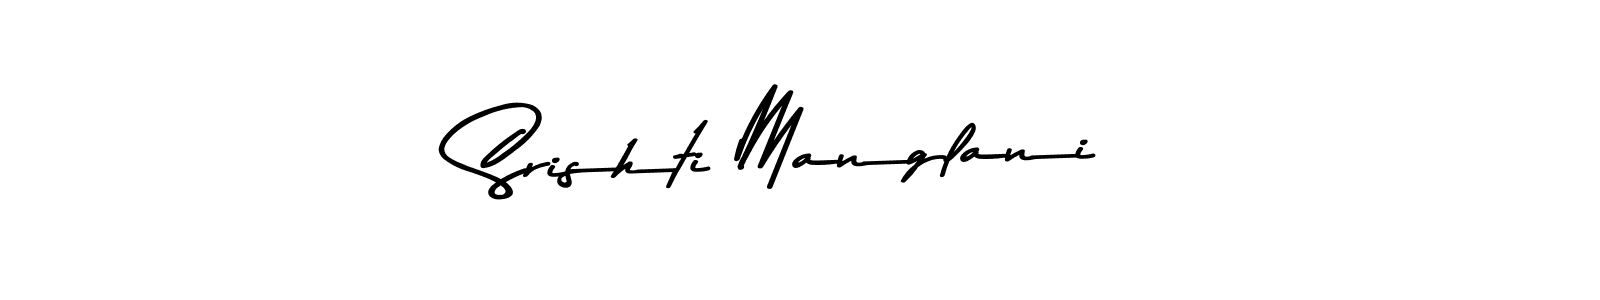 How to Draw Srishti Manglani signature style? Asem Kandis PERSONAL USE is a latest design signature styles for name Srishti Manglani. Srishti Manglani signature style 9 images and pictures png